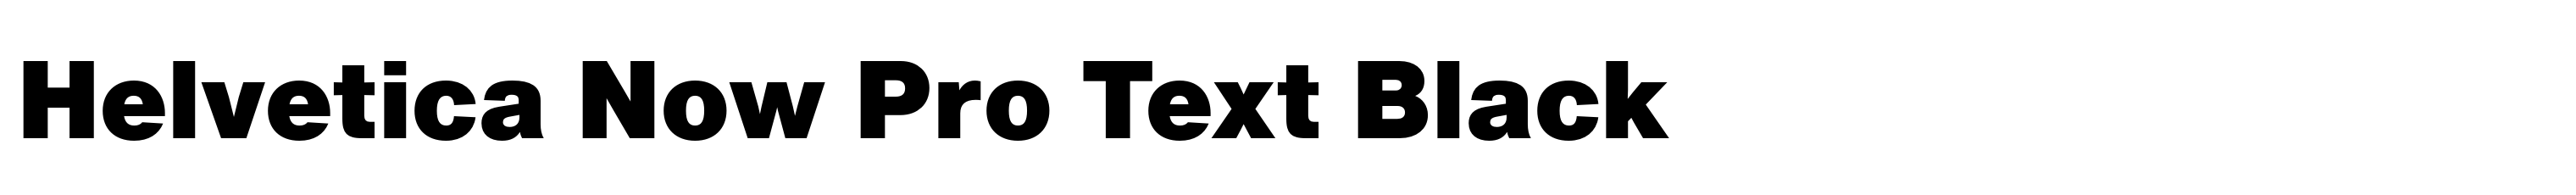 Helvetica Now Pro Text Black